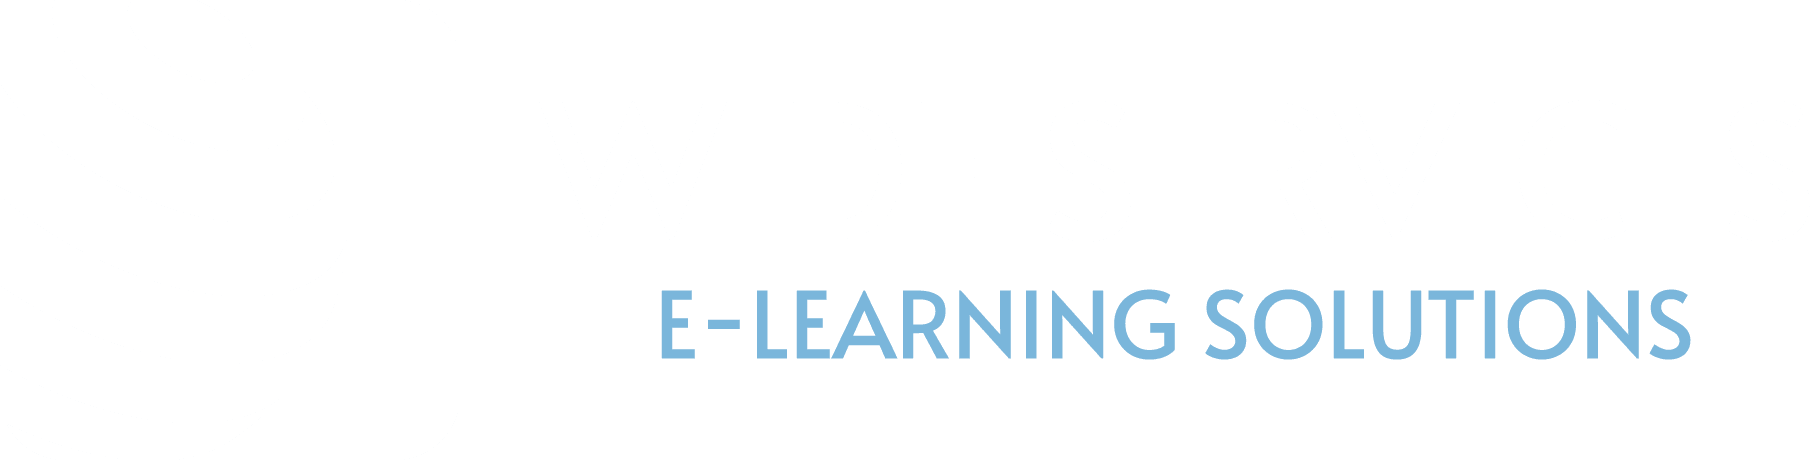 widesrvices-logo